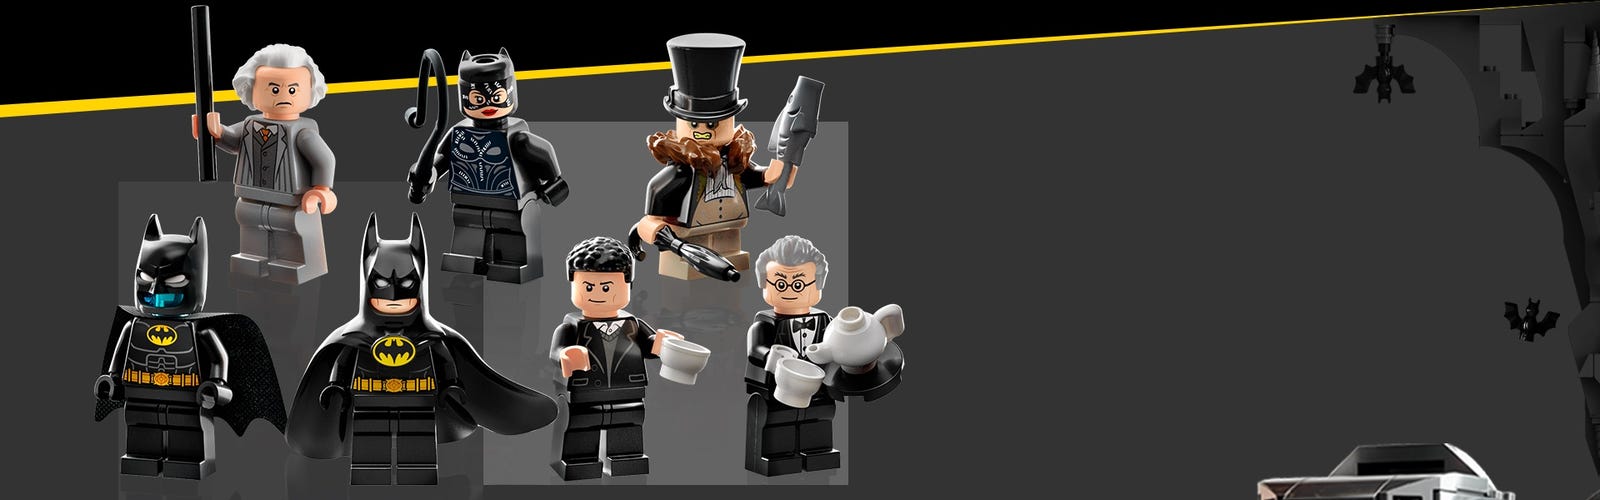 LEGO's Shadow Box Recreates the Batcave from Batman Returns